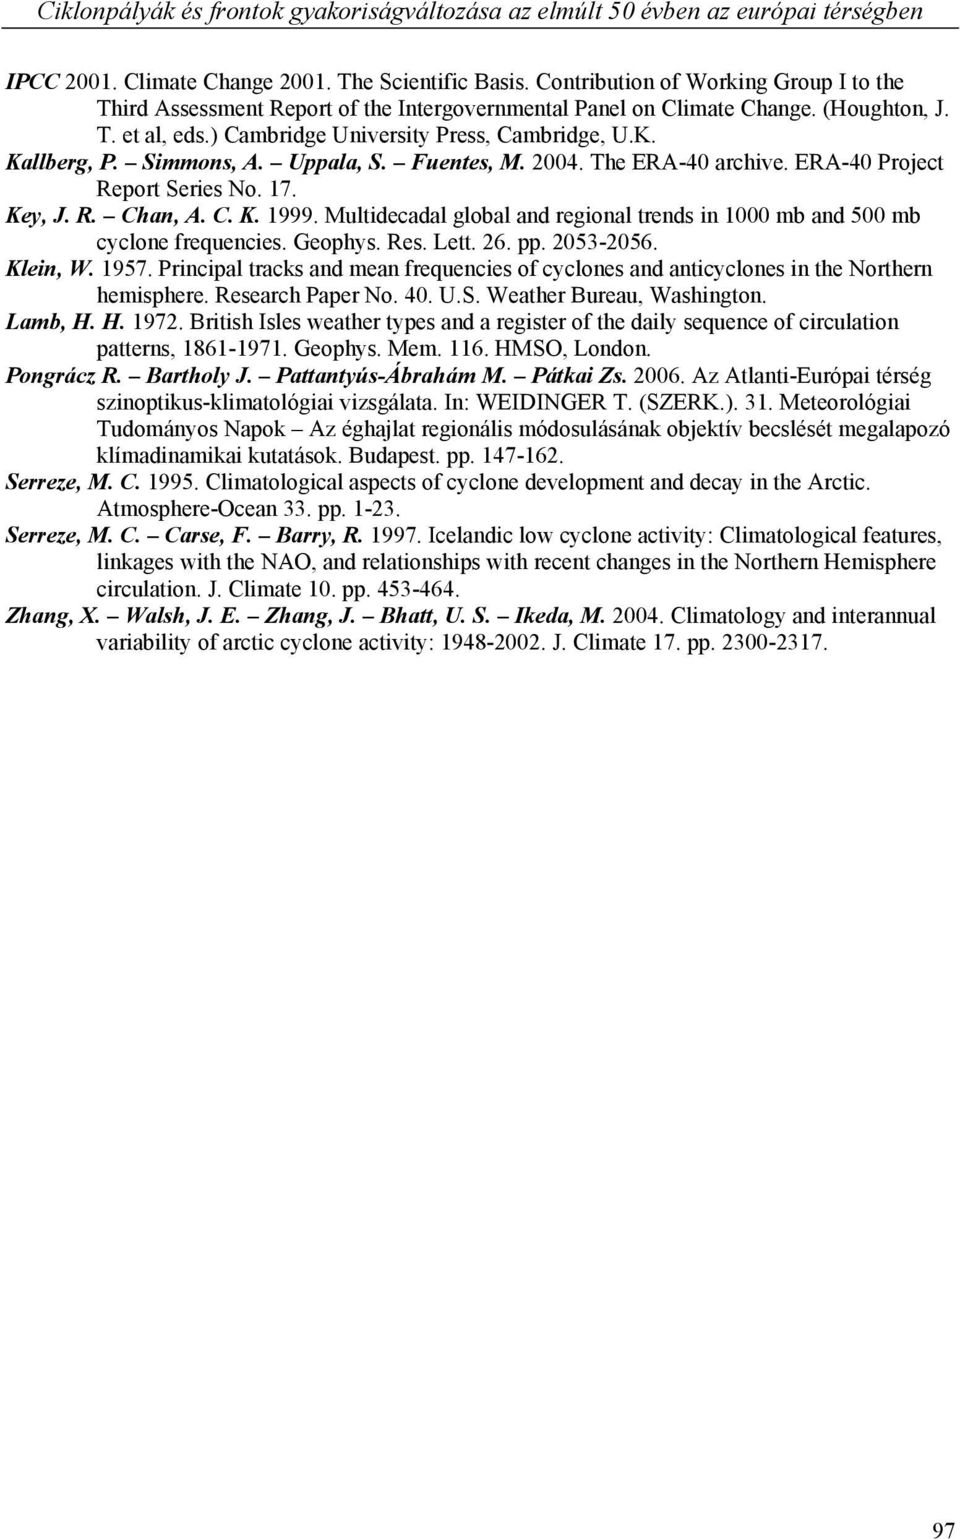 Simmons, A. Uppala, S. Fuentes, M. 2004. The ERA-40 archive. ERA-40 Project Report Series No. 17. Key, J. R. Chan, A. C. K. 1999.